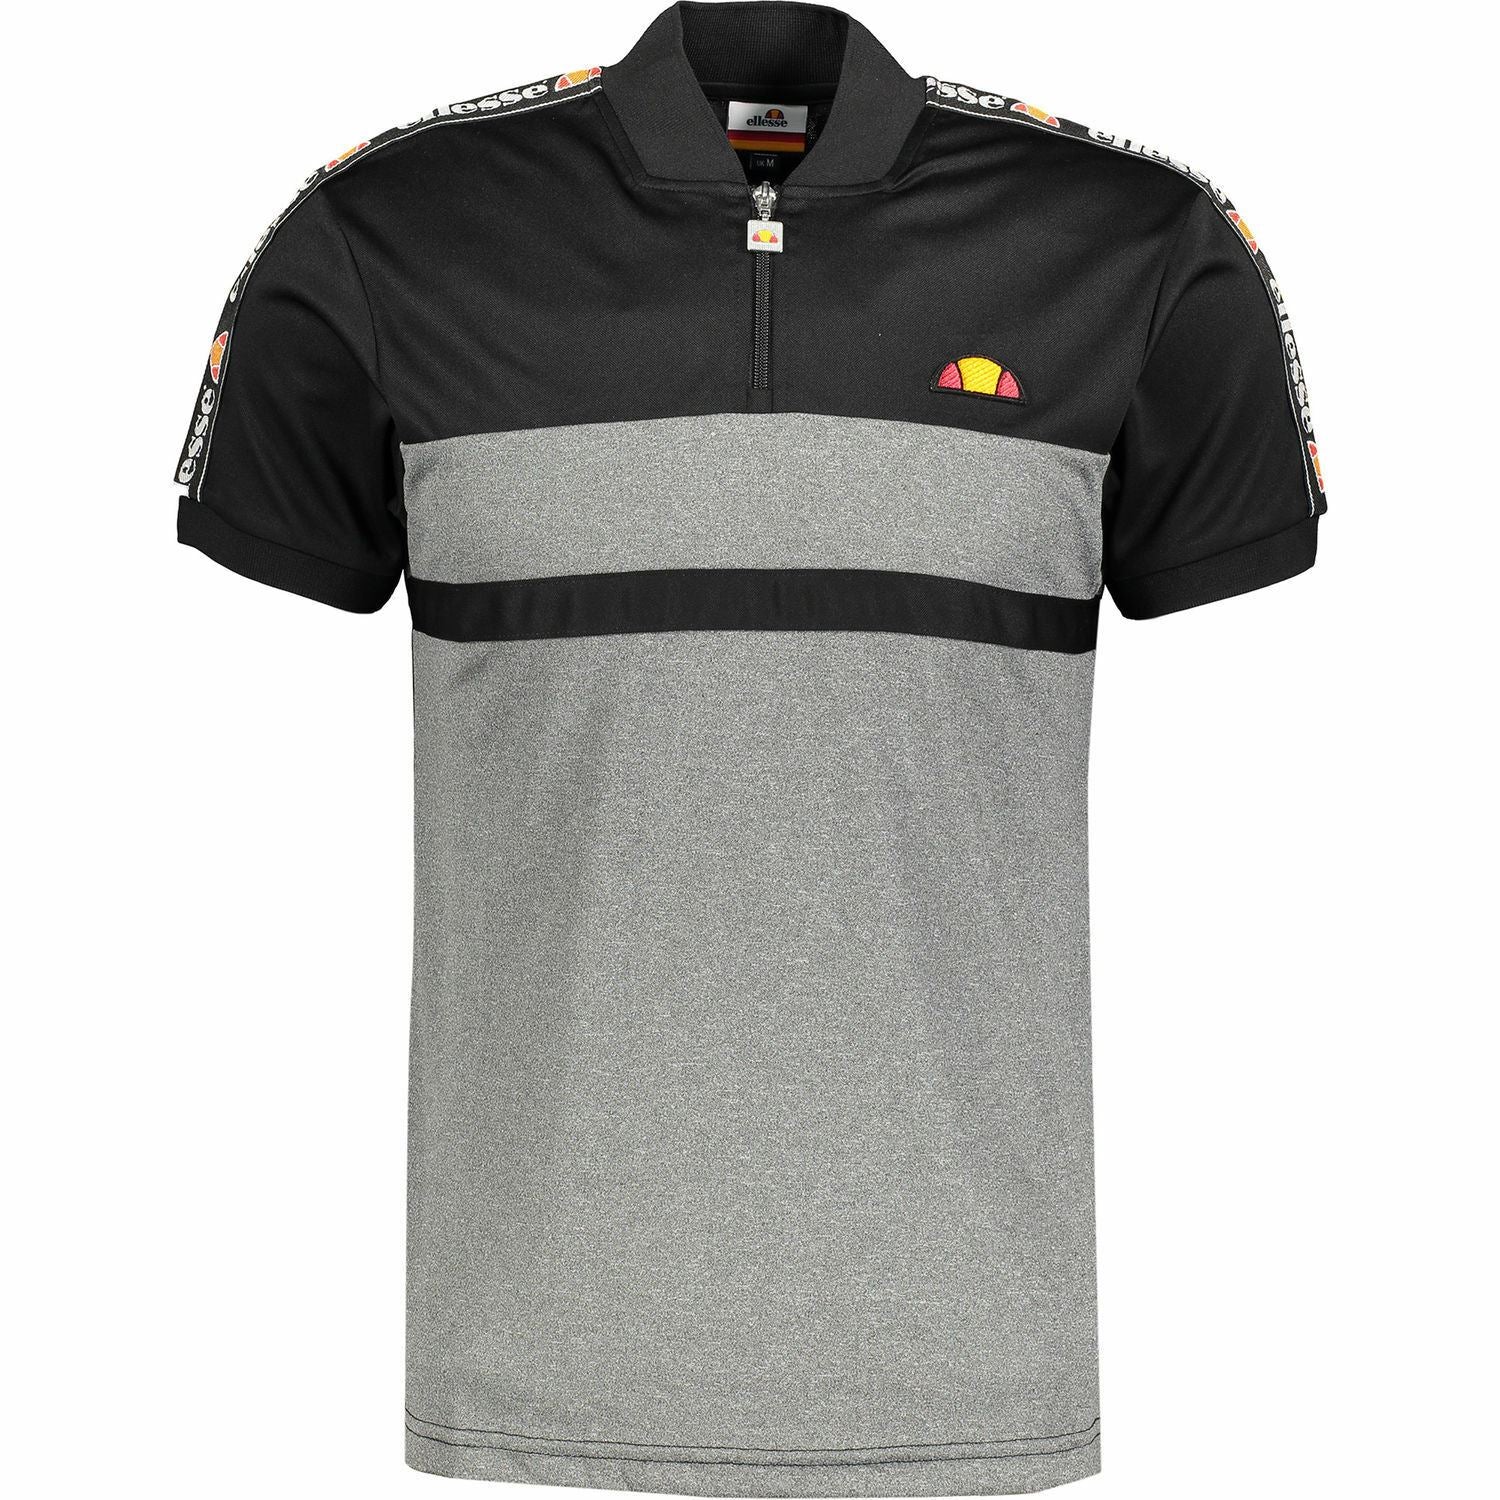 ELLESSE Men's GATLIN T-shirt Grey and Black Panelled Zip Detail Size Small